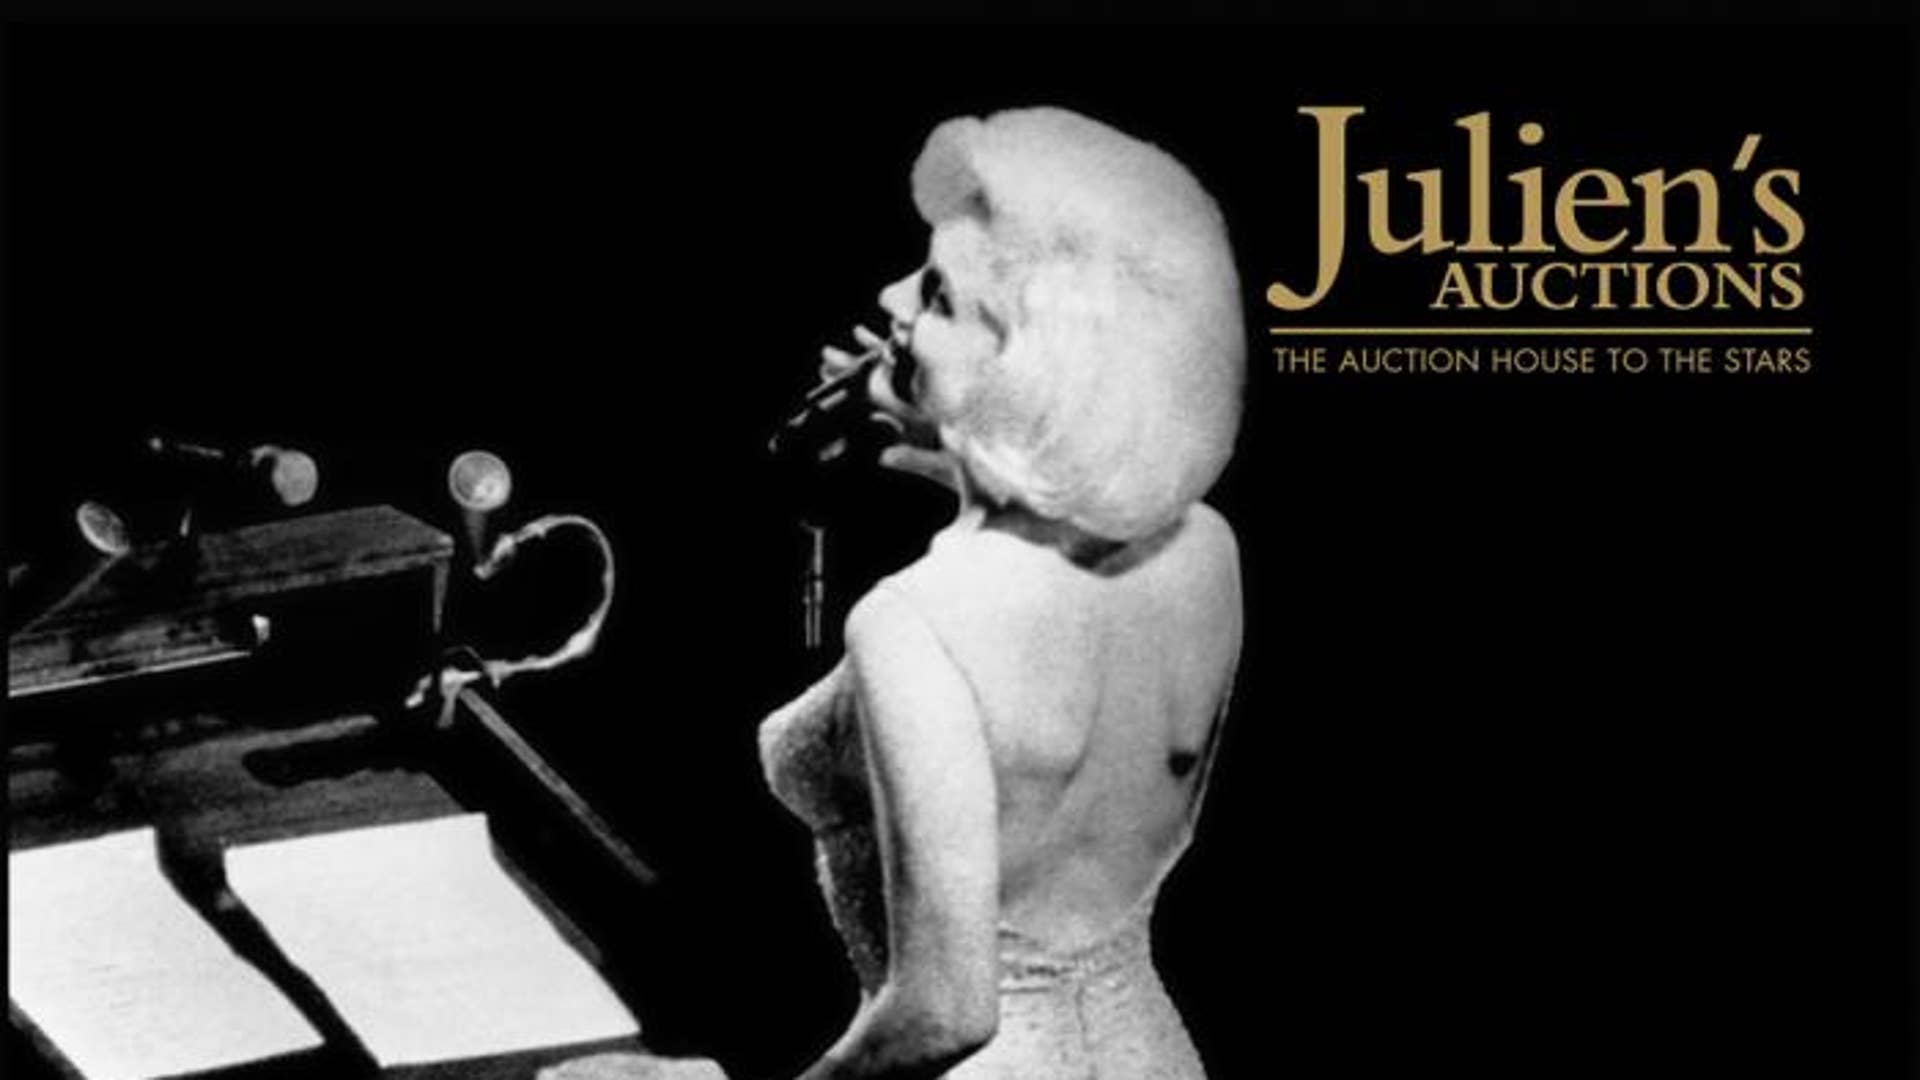 Met Gala 2022: Five facts about the Marilyn Monroe 'Happy Birthday, Mr  President' dress worn by Kim Kardashian - 9Style